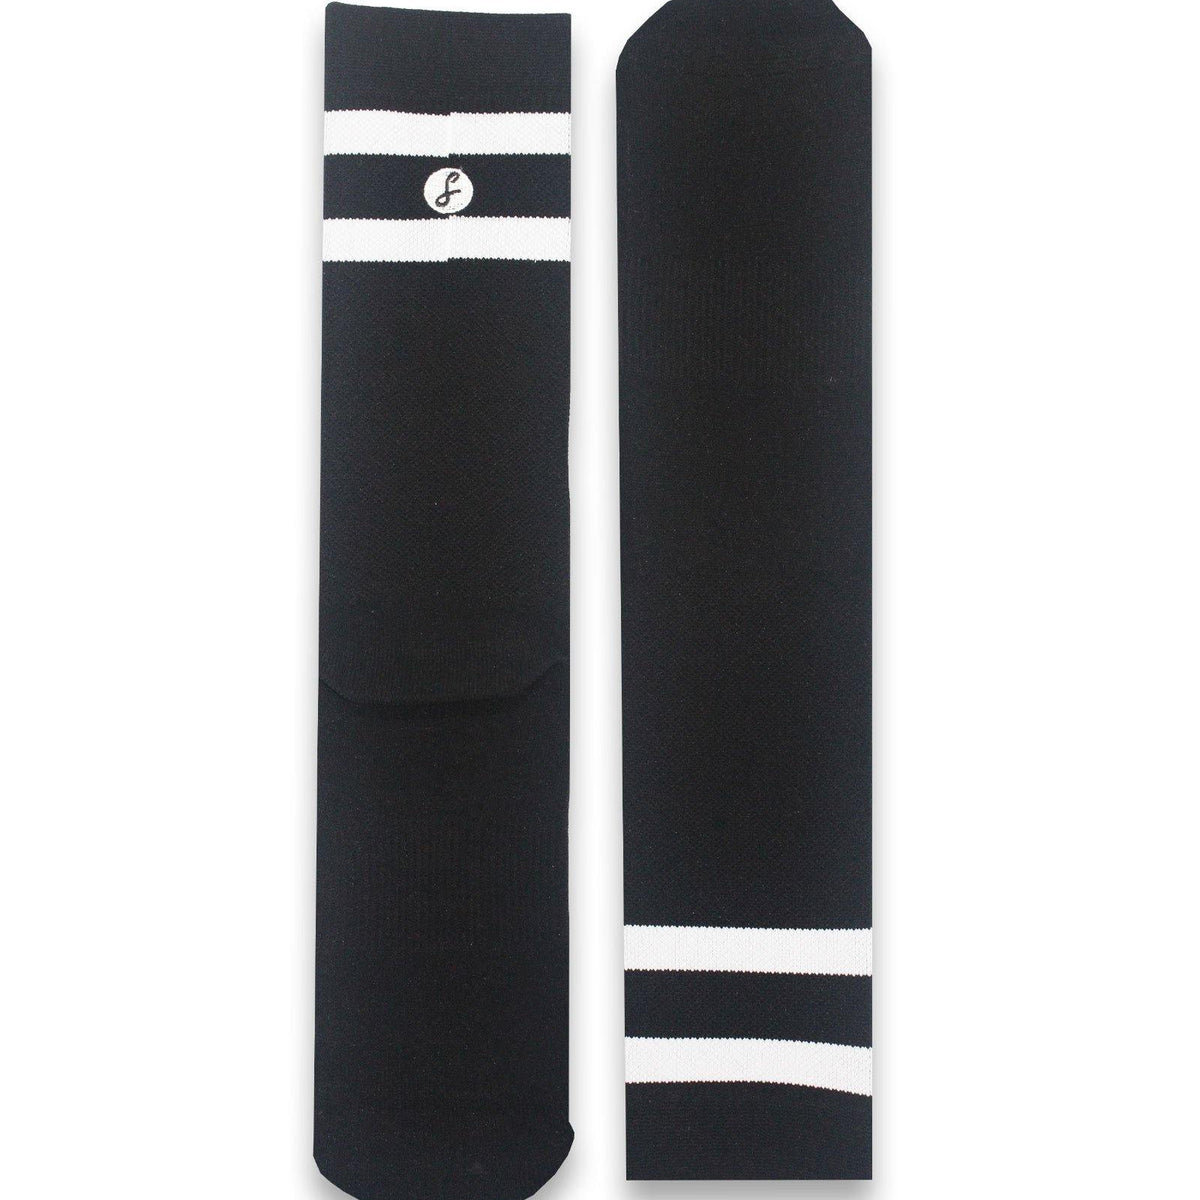 Two Stripe Black Compression Gym Socks